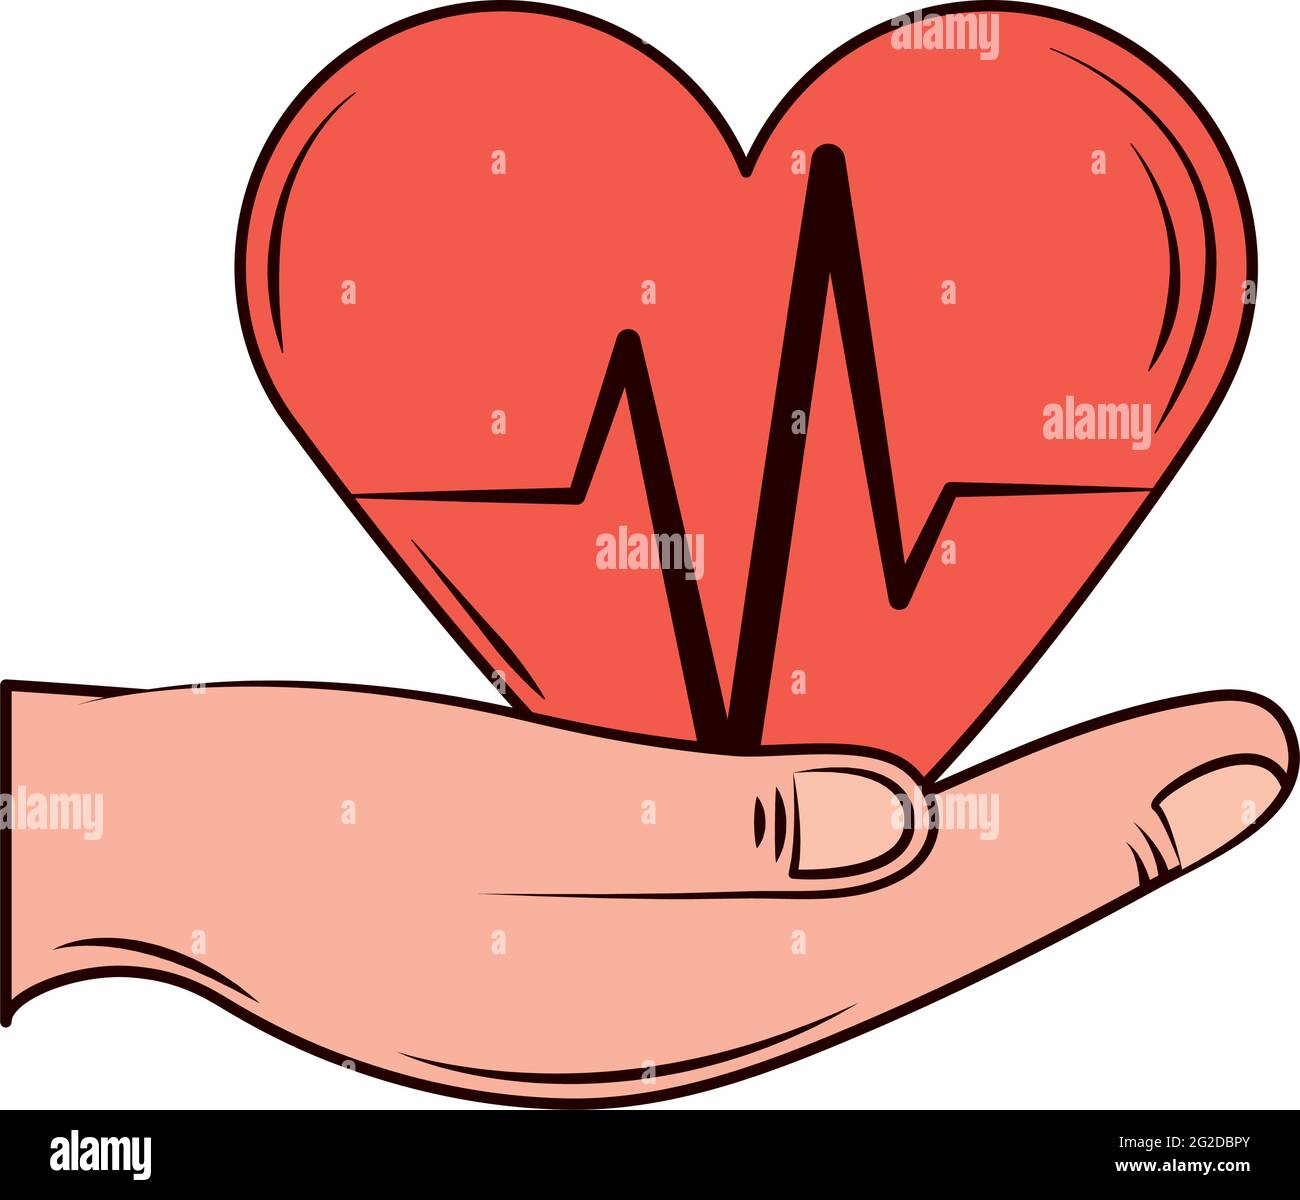 health insurance heartbeat Stock Vector